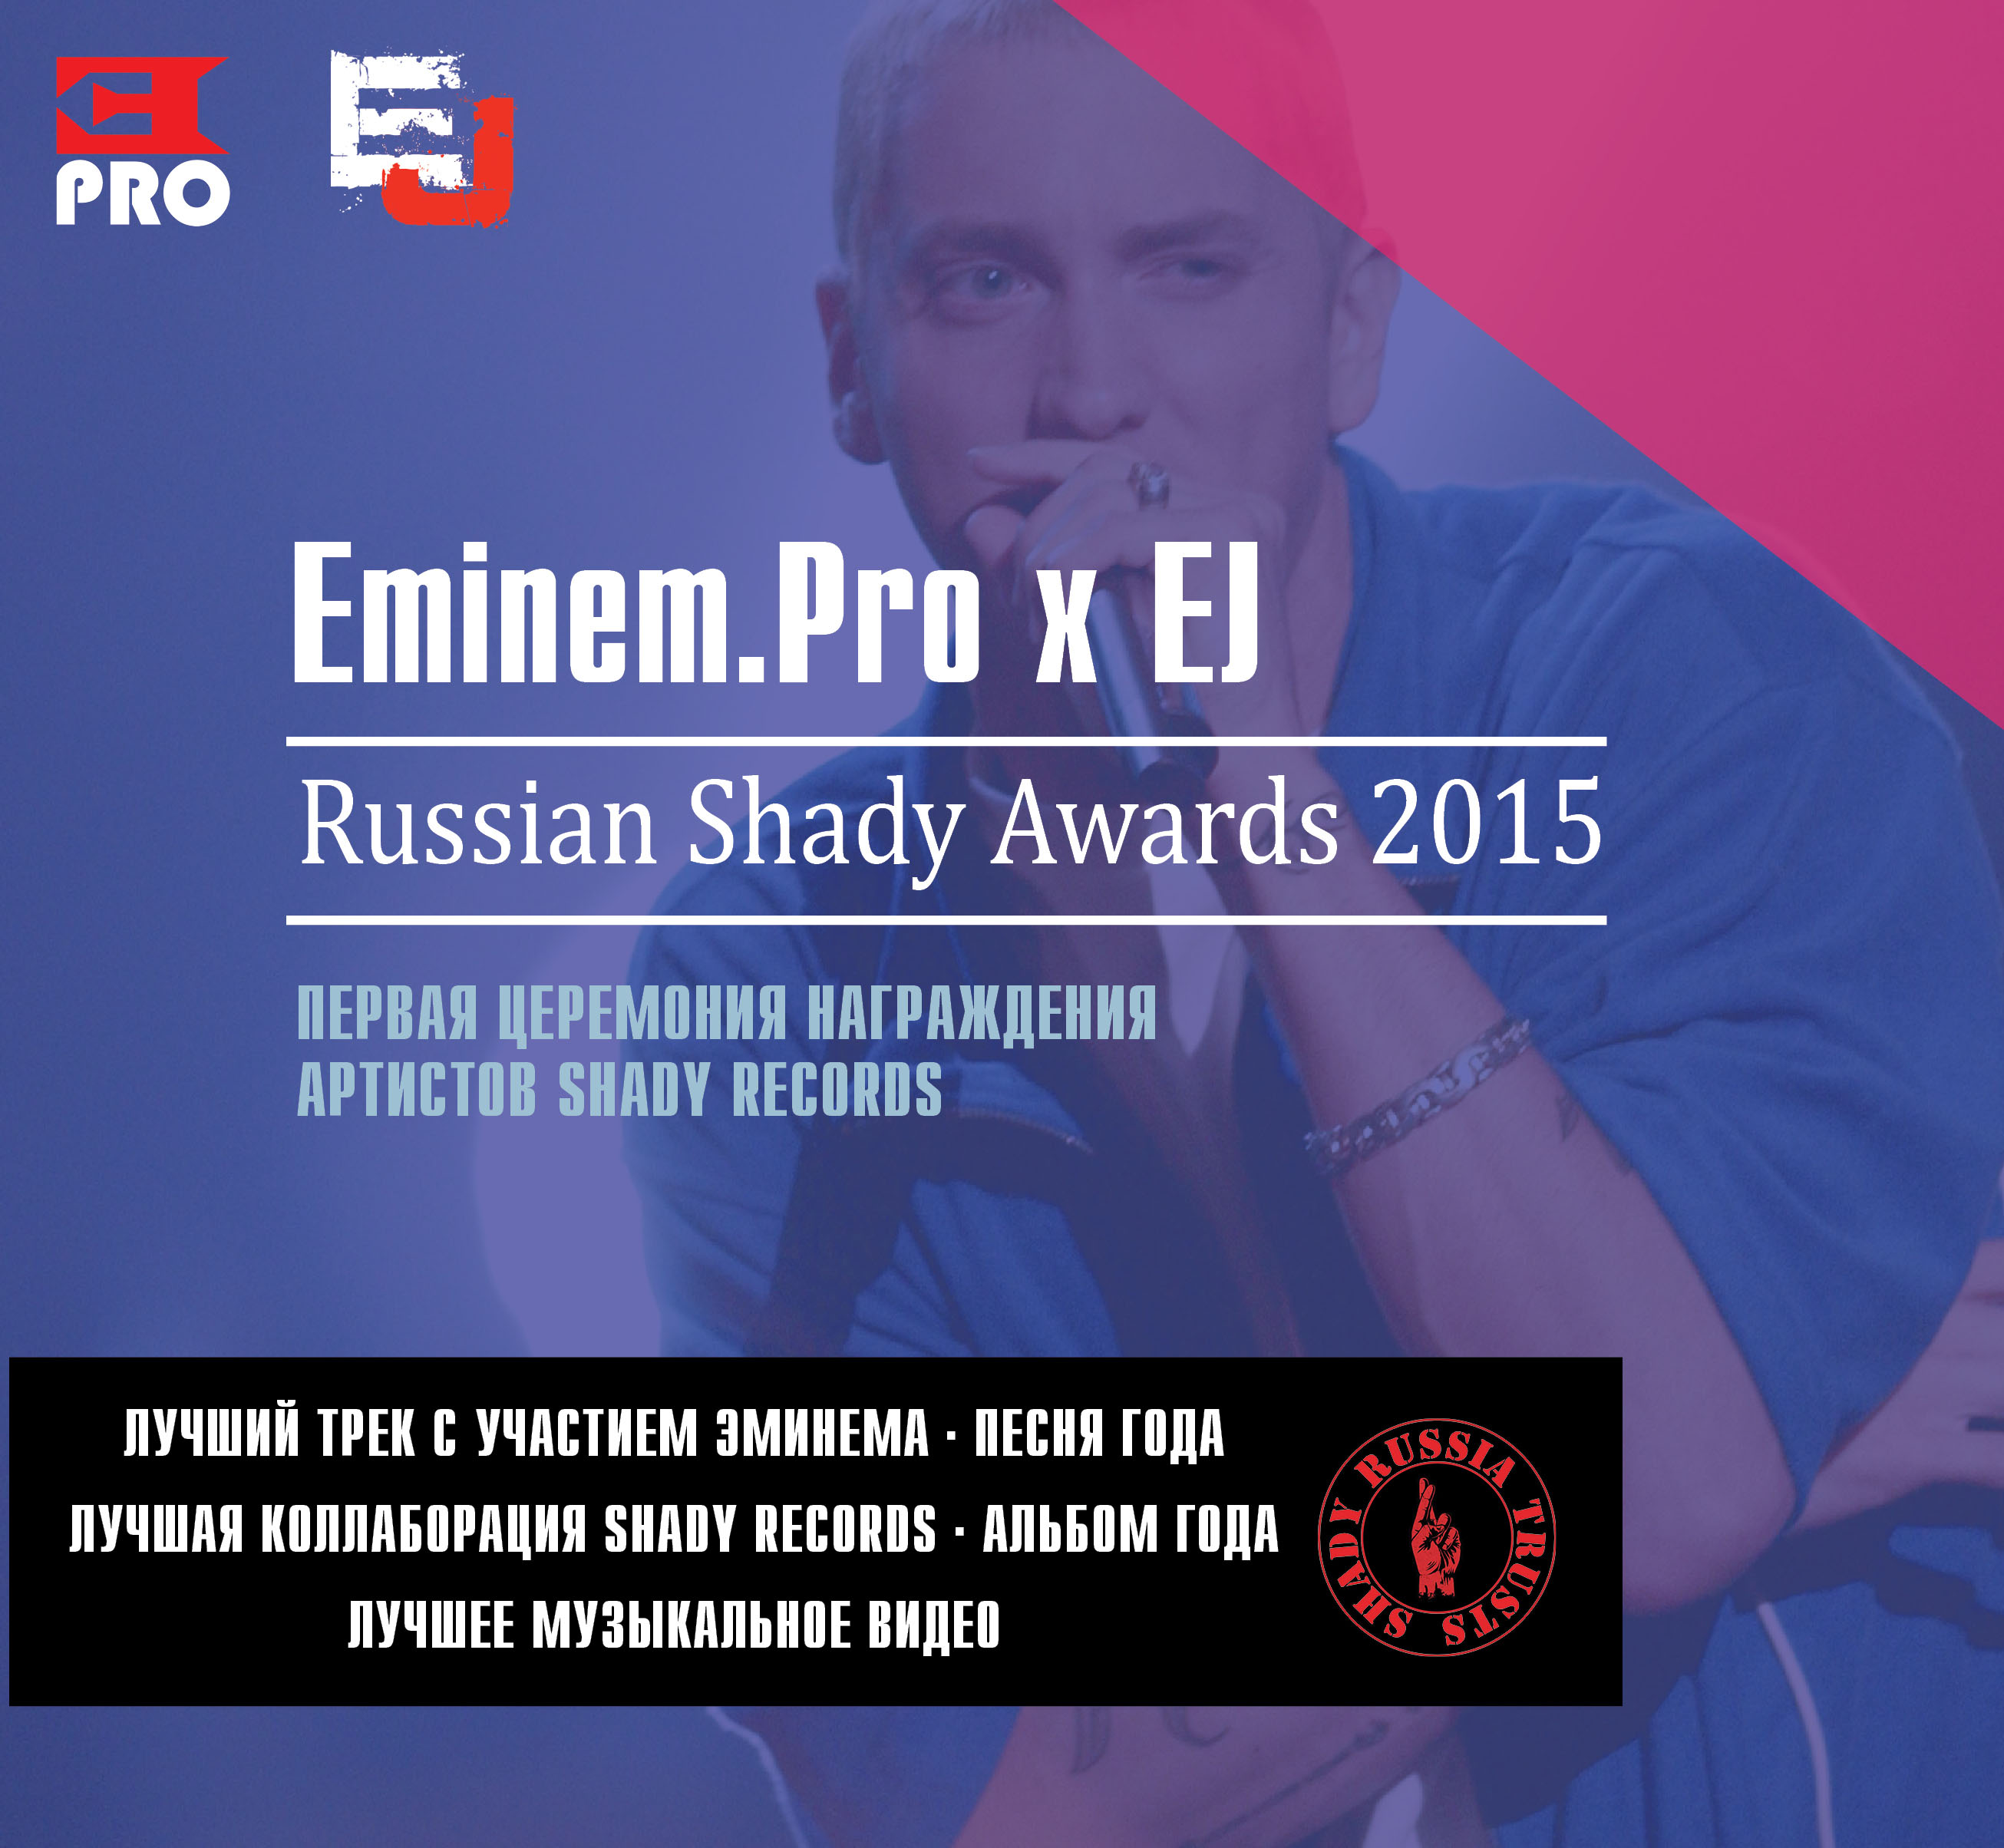 Russian Shady Awards 2015: Итоги